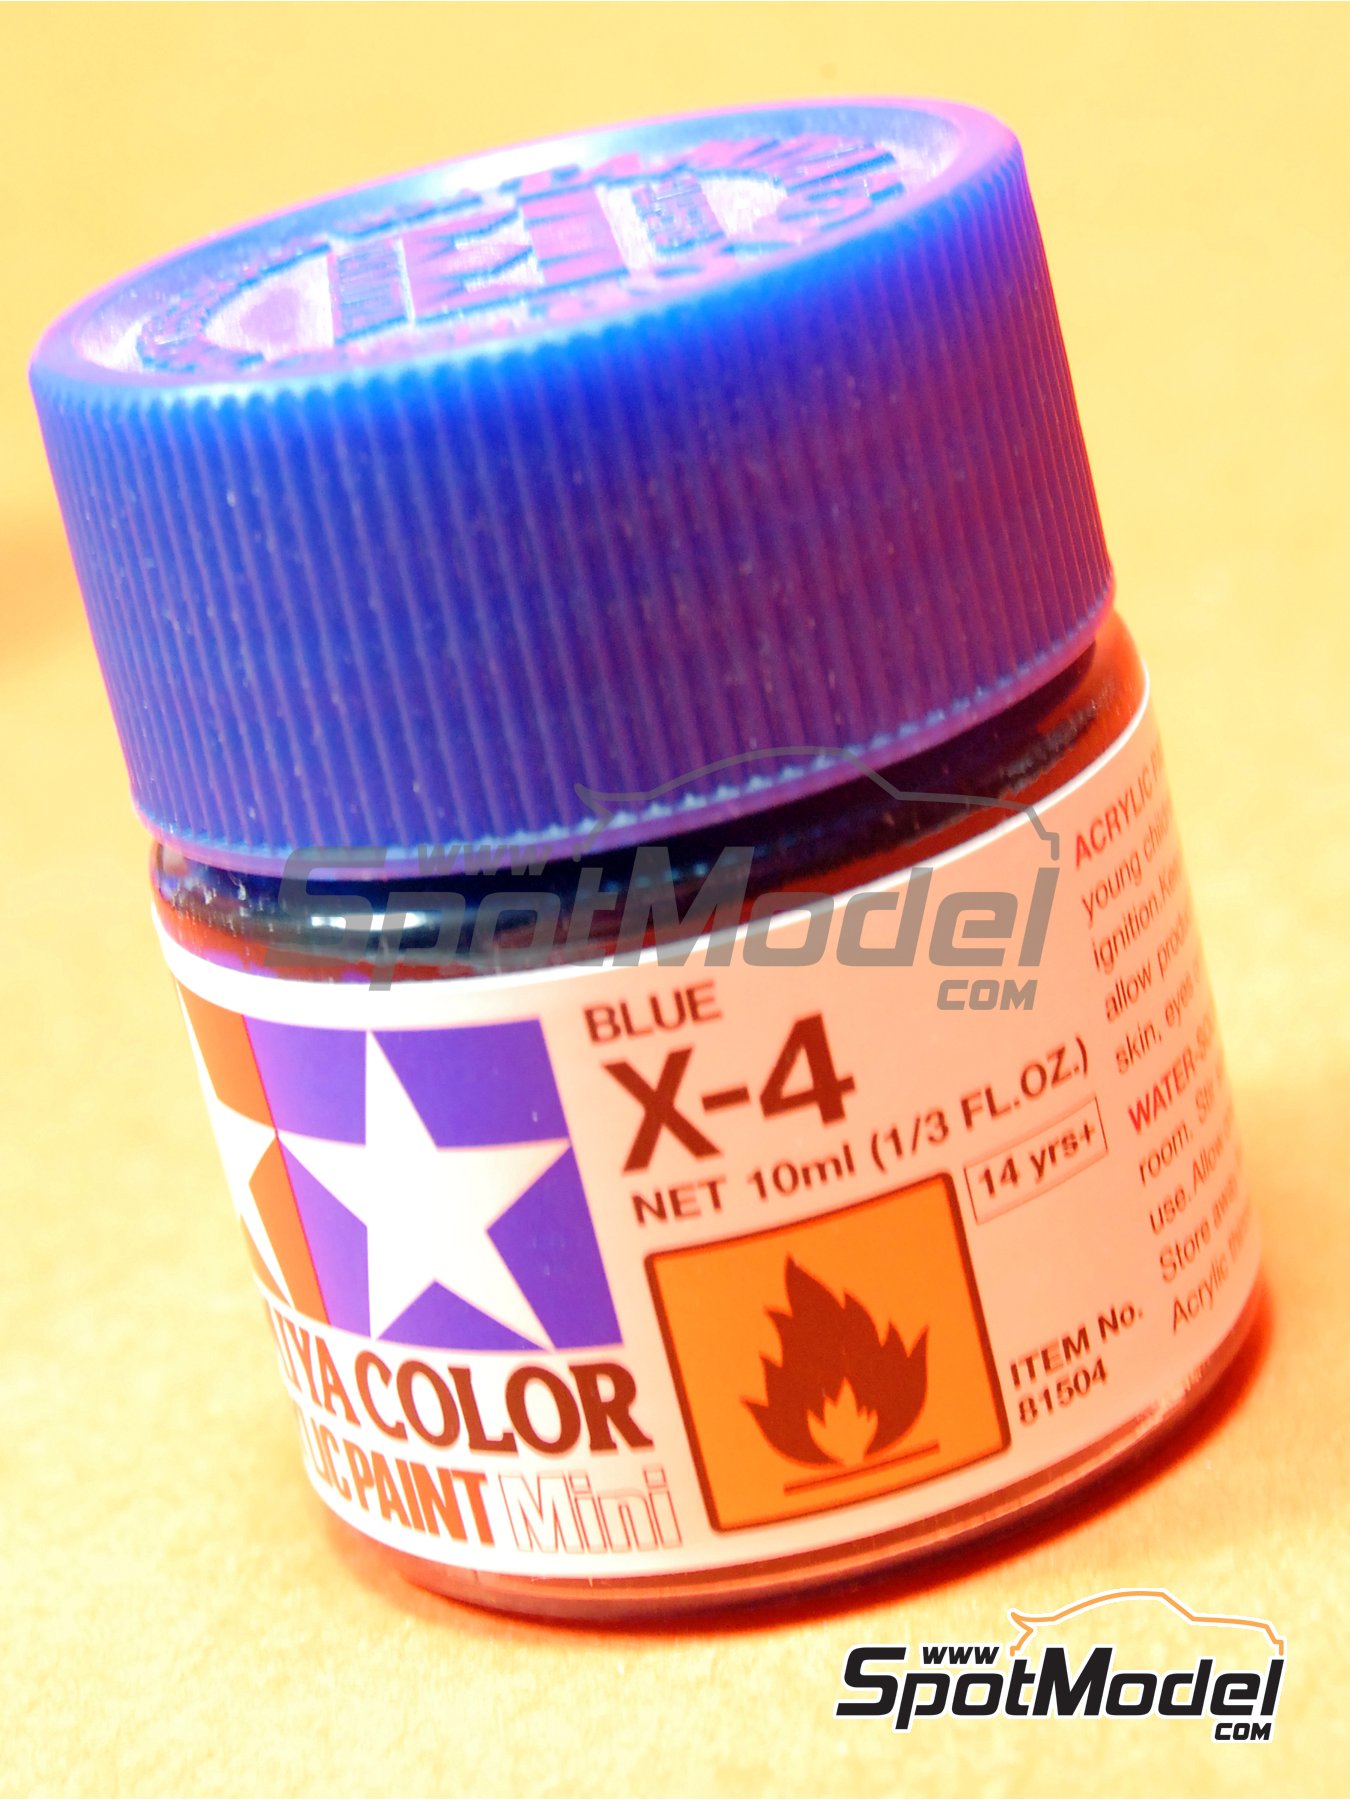 Tamiya Acrylic Paint (MINI'S) 10ml Bottles XF-1 to XF-90 Colors